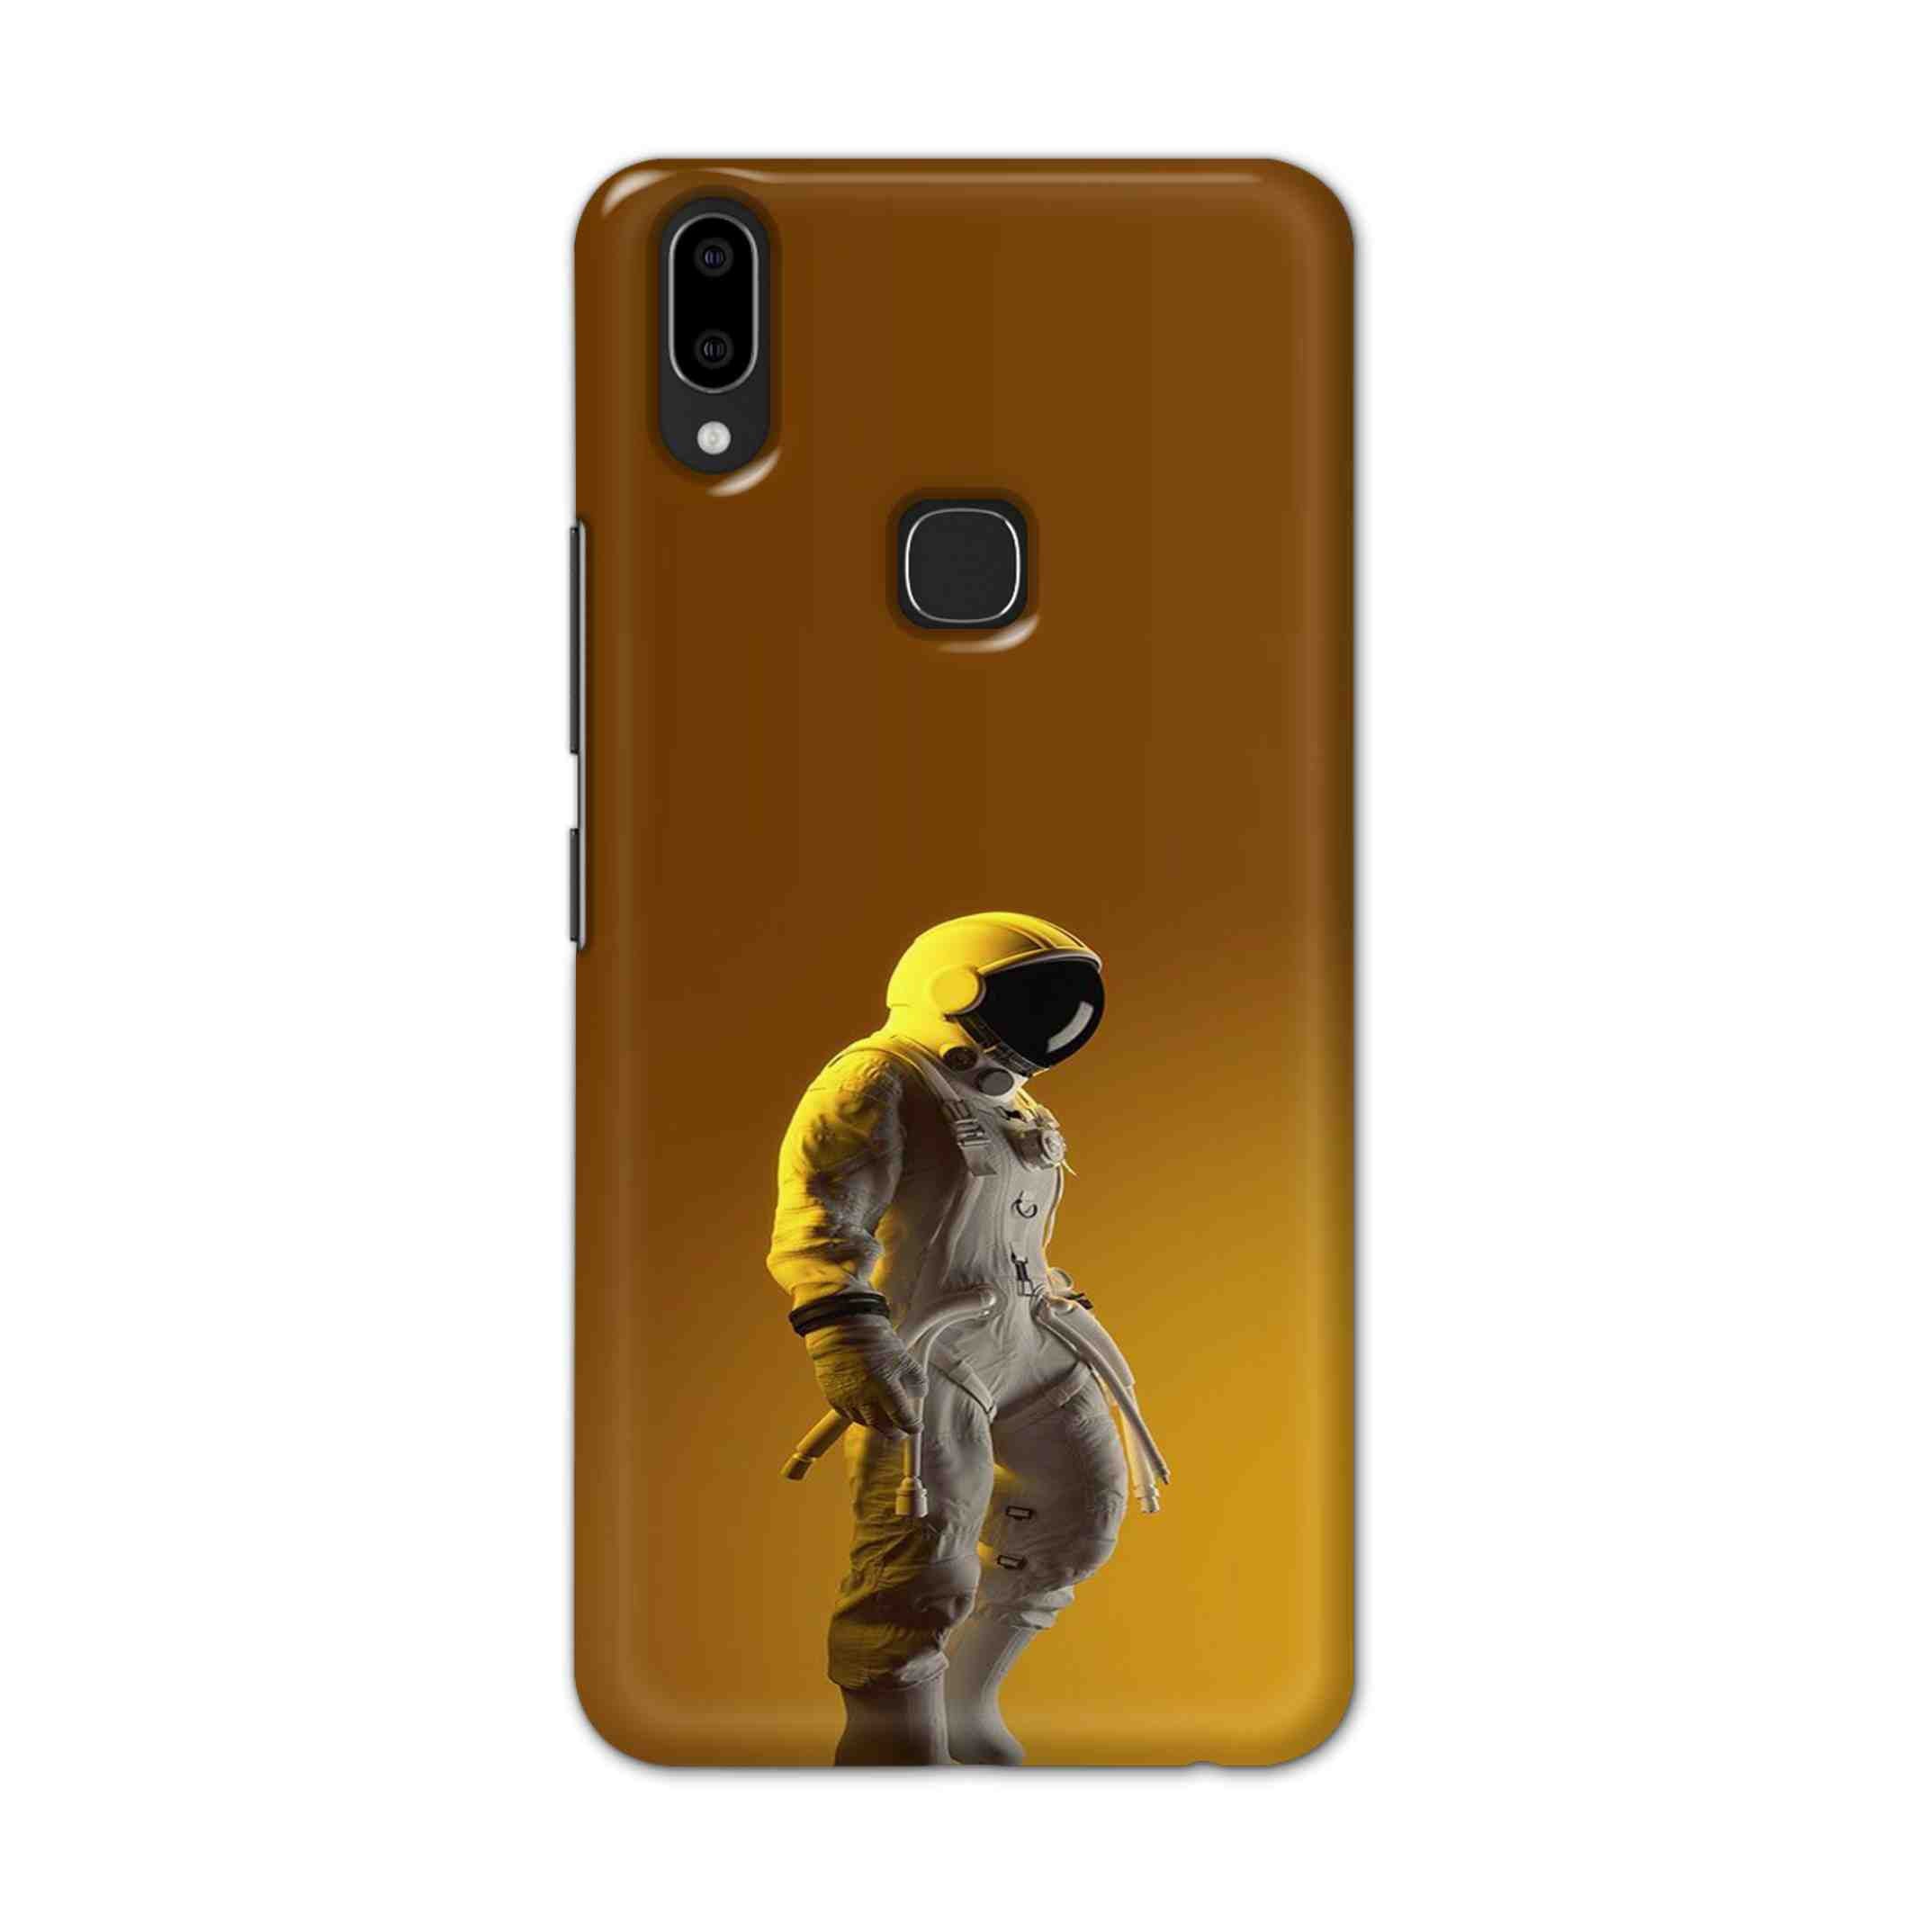 Buy Yellow Astronaut Hard Back Mobile Phone Case Cover For Vivo V9 / V9 Youth Online